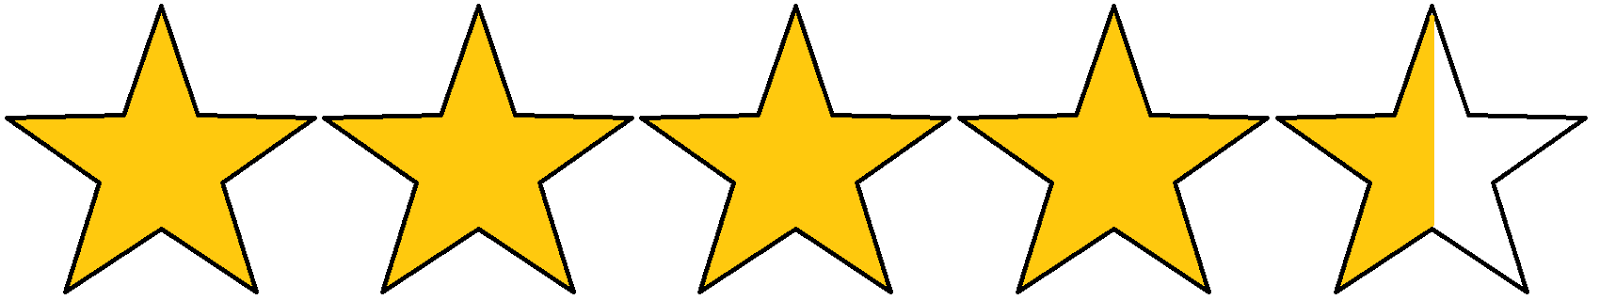 MapTune Star Rating